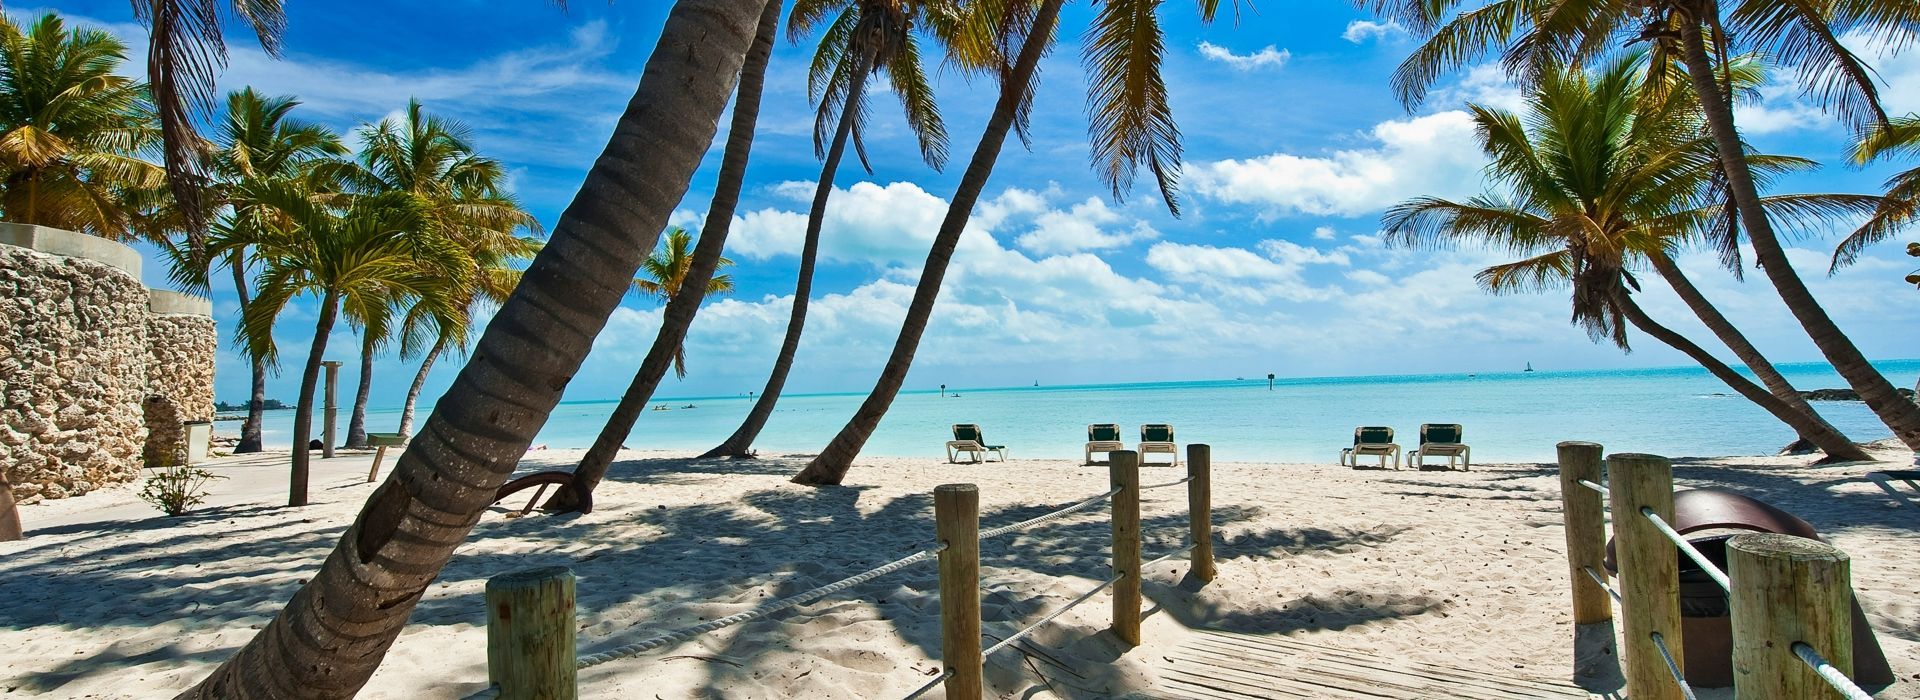 florida-key-west-beach-palm-trees-stock.jpg